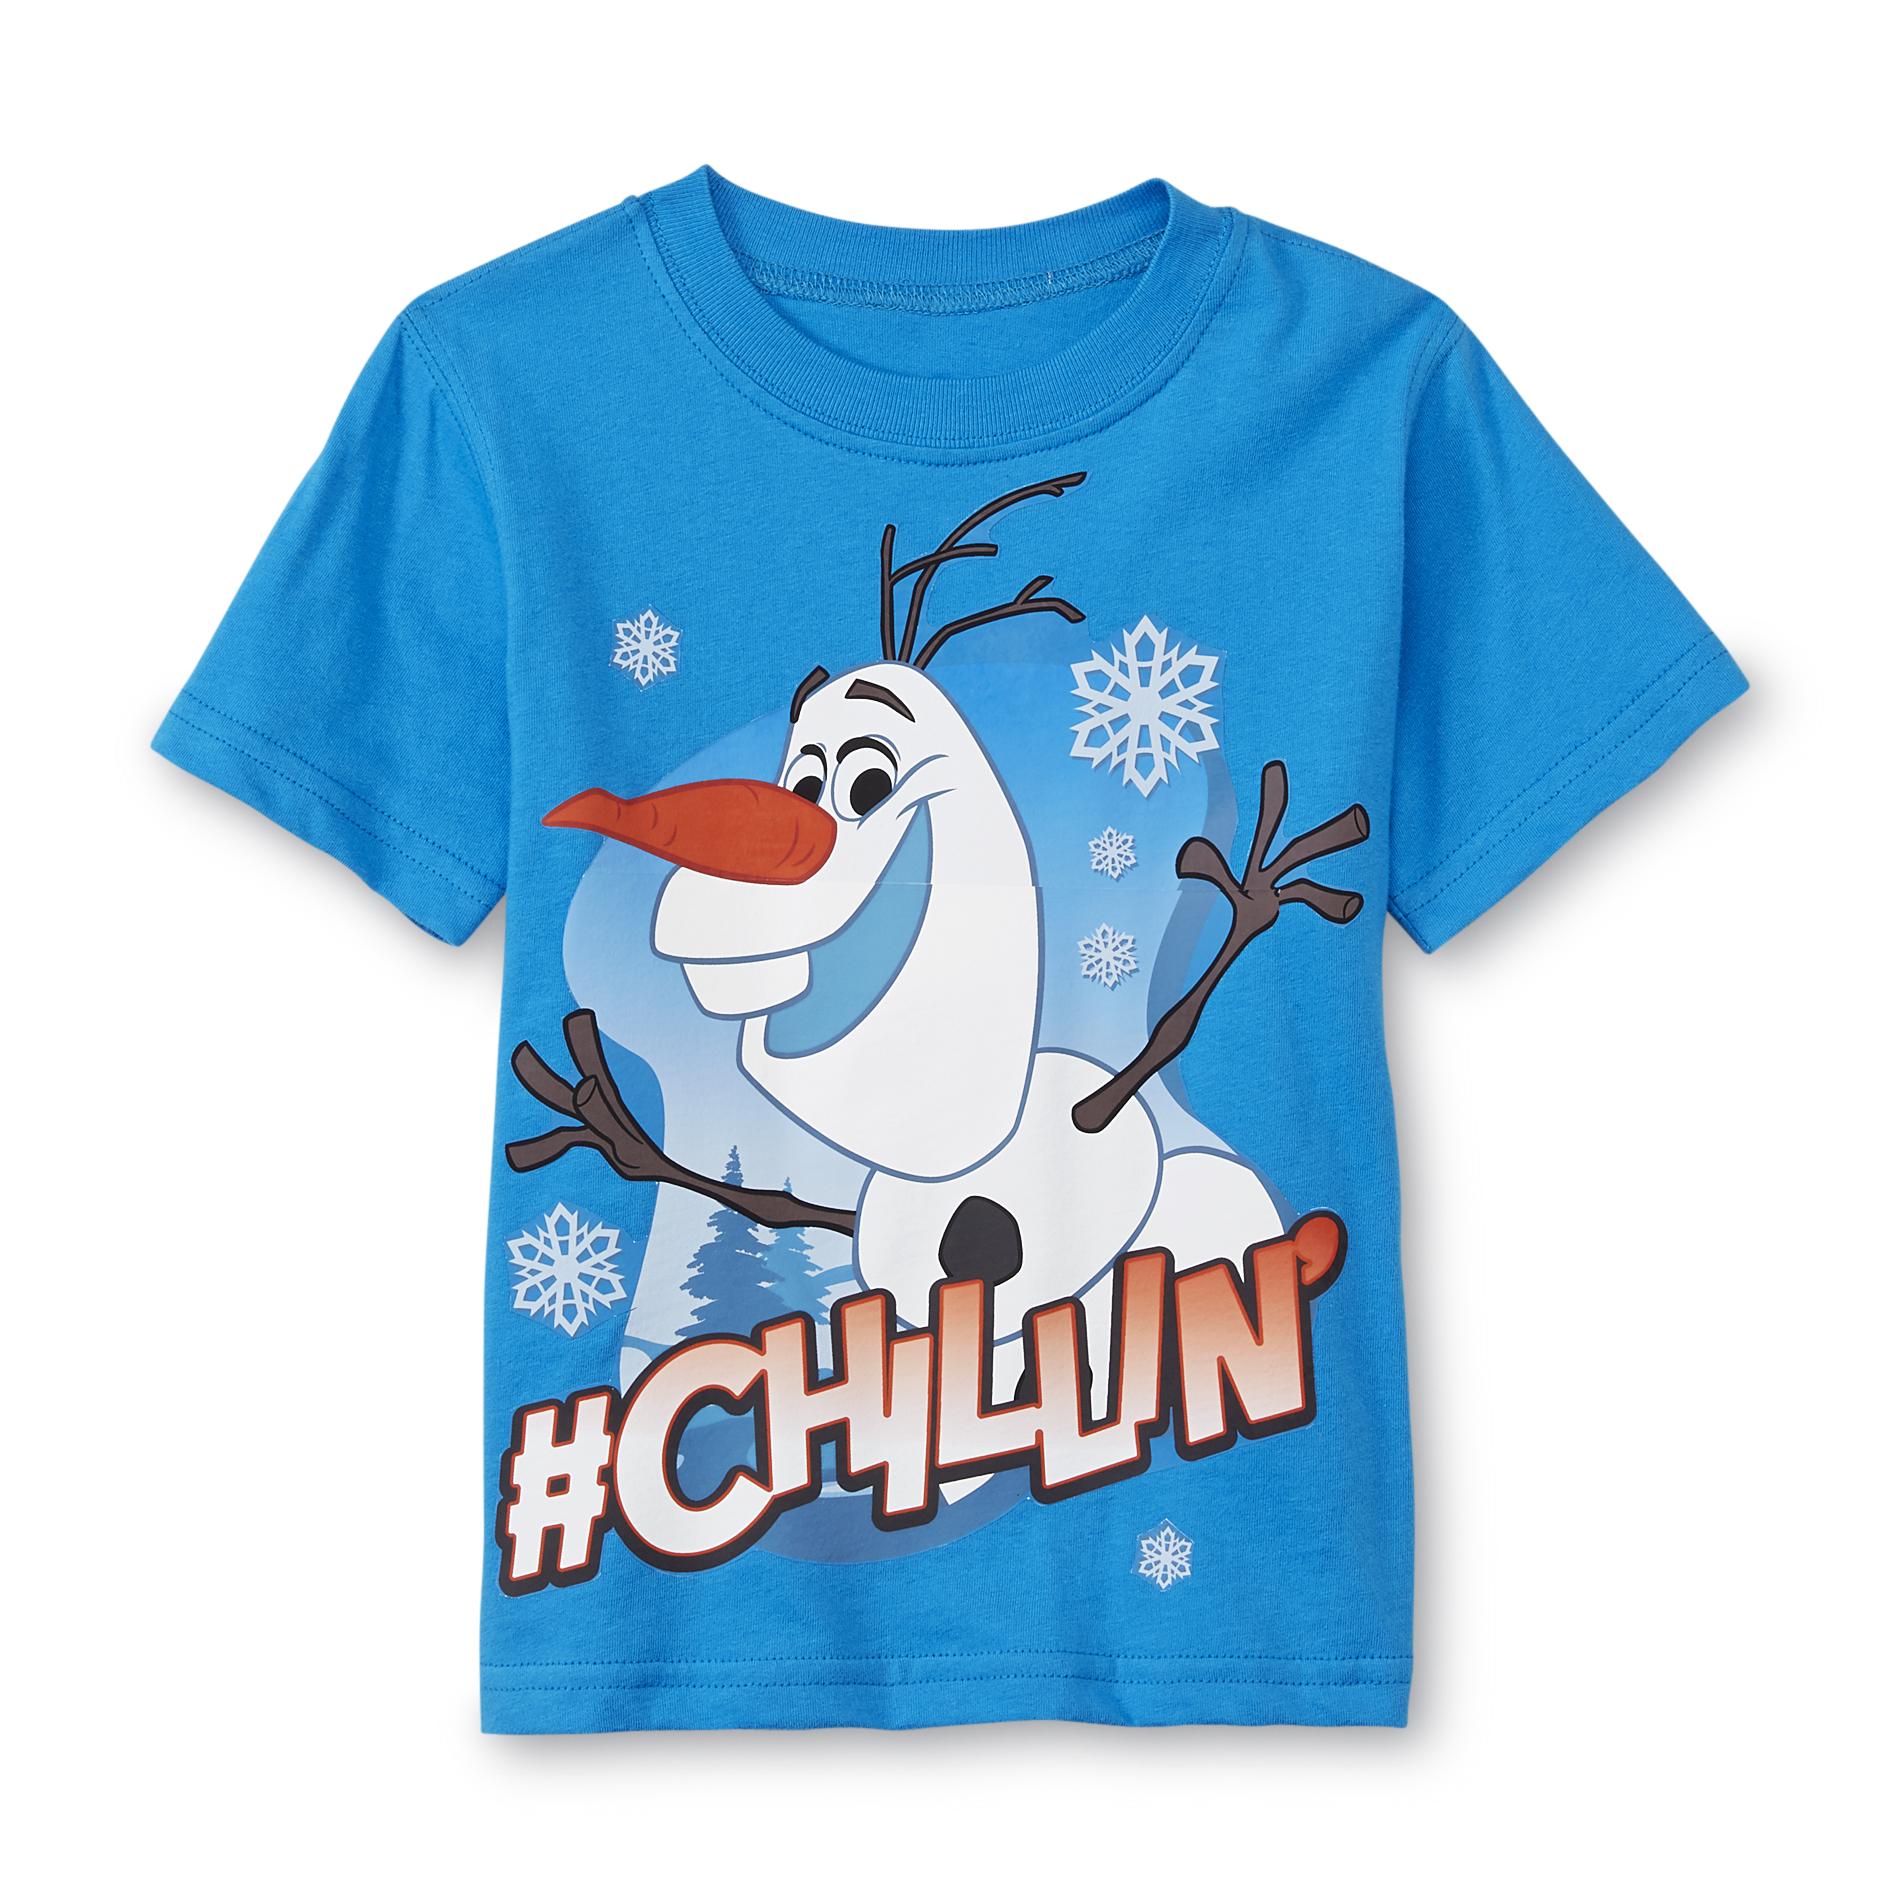 Disney Frozen Toddler Boy's T-Shirt - Olaf